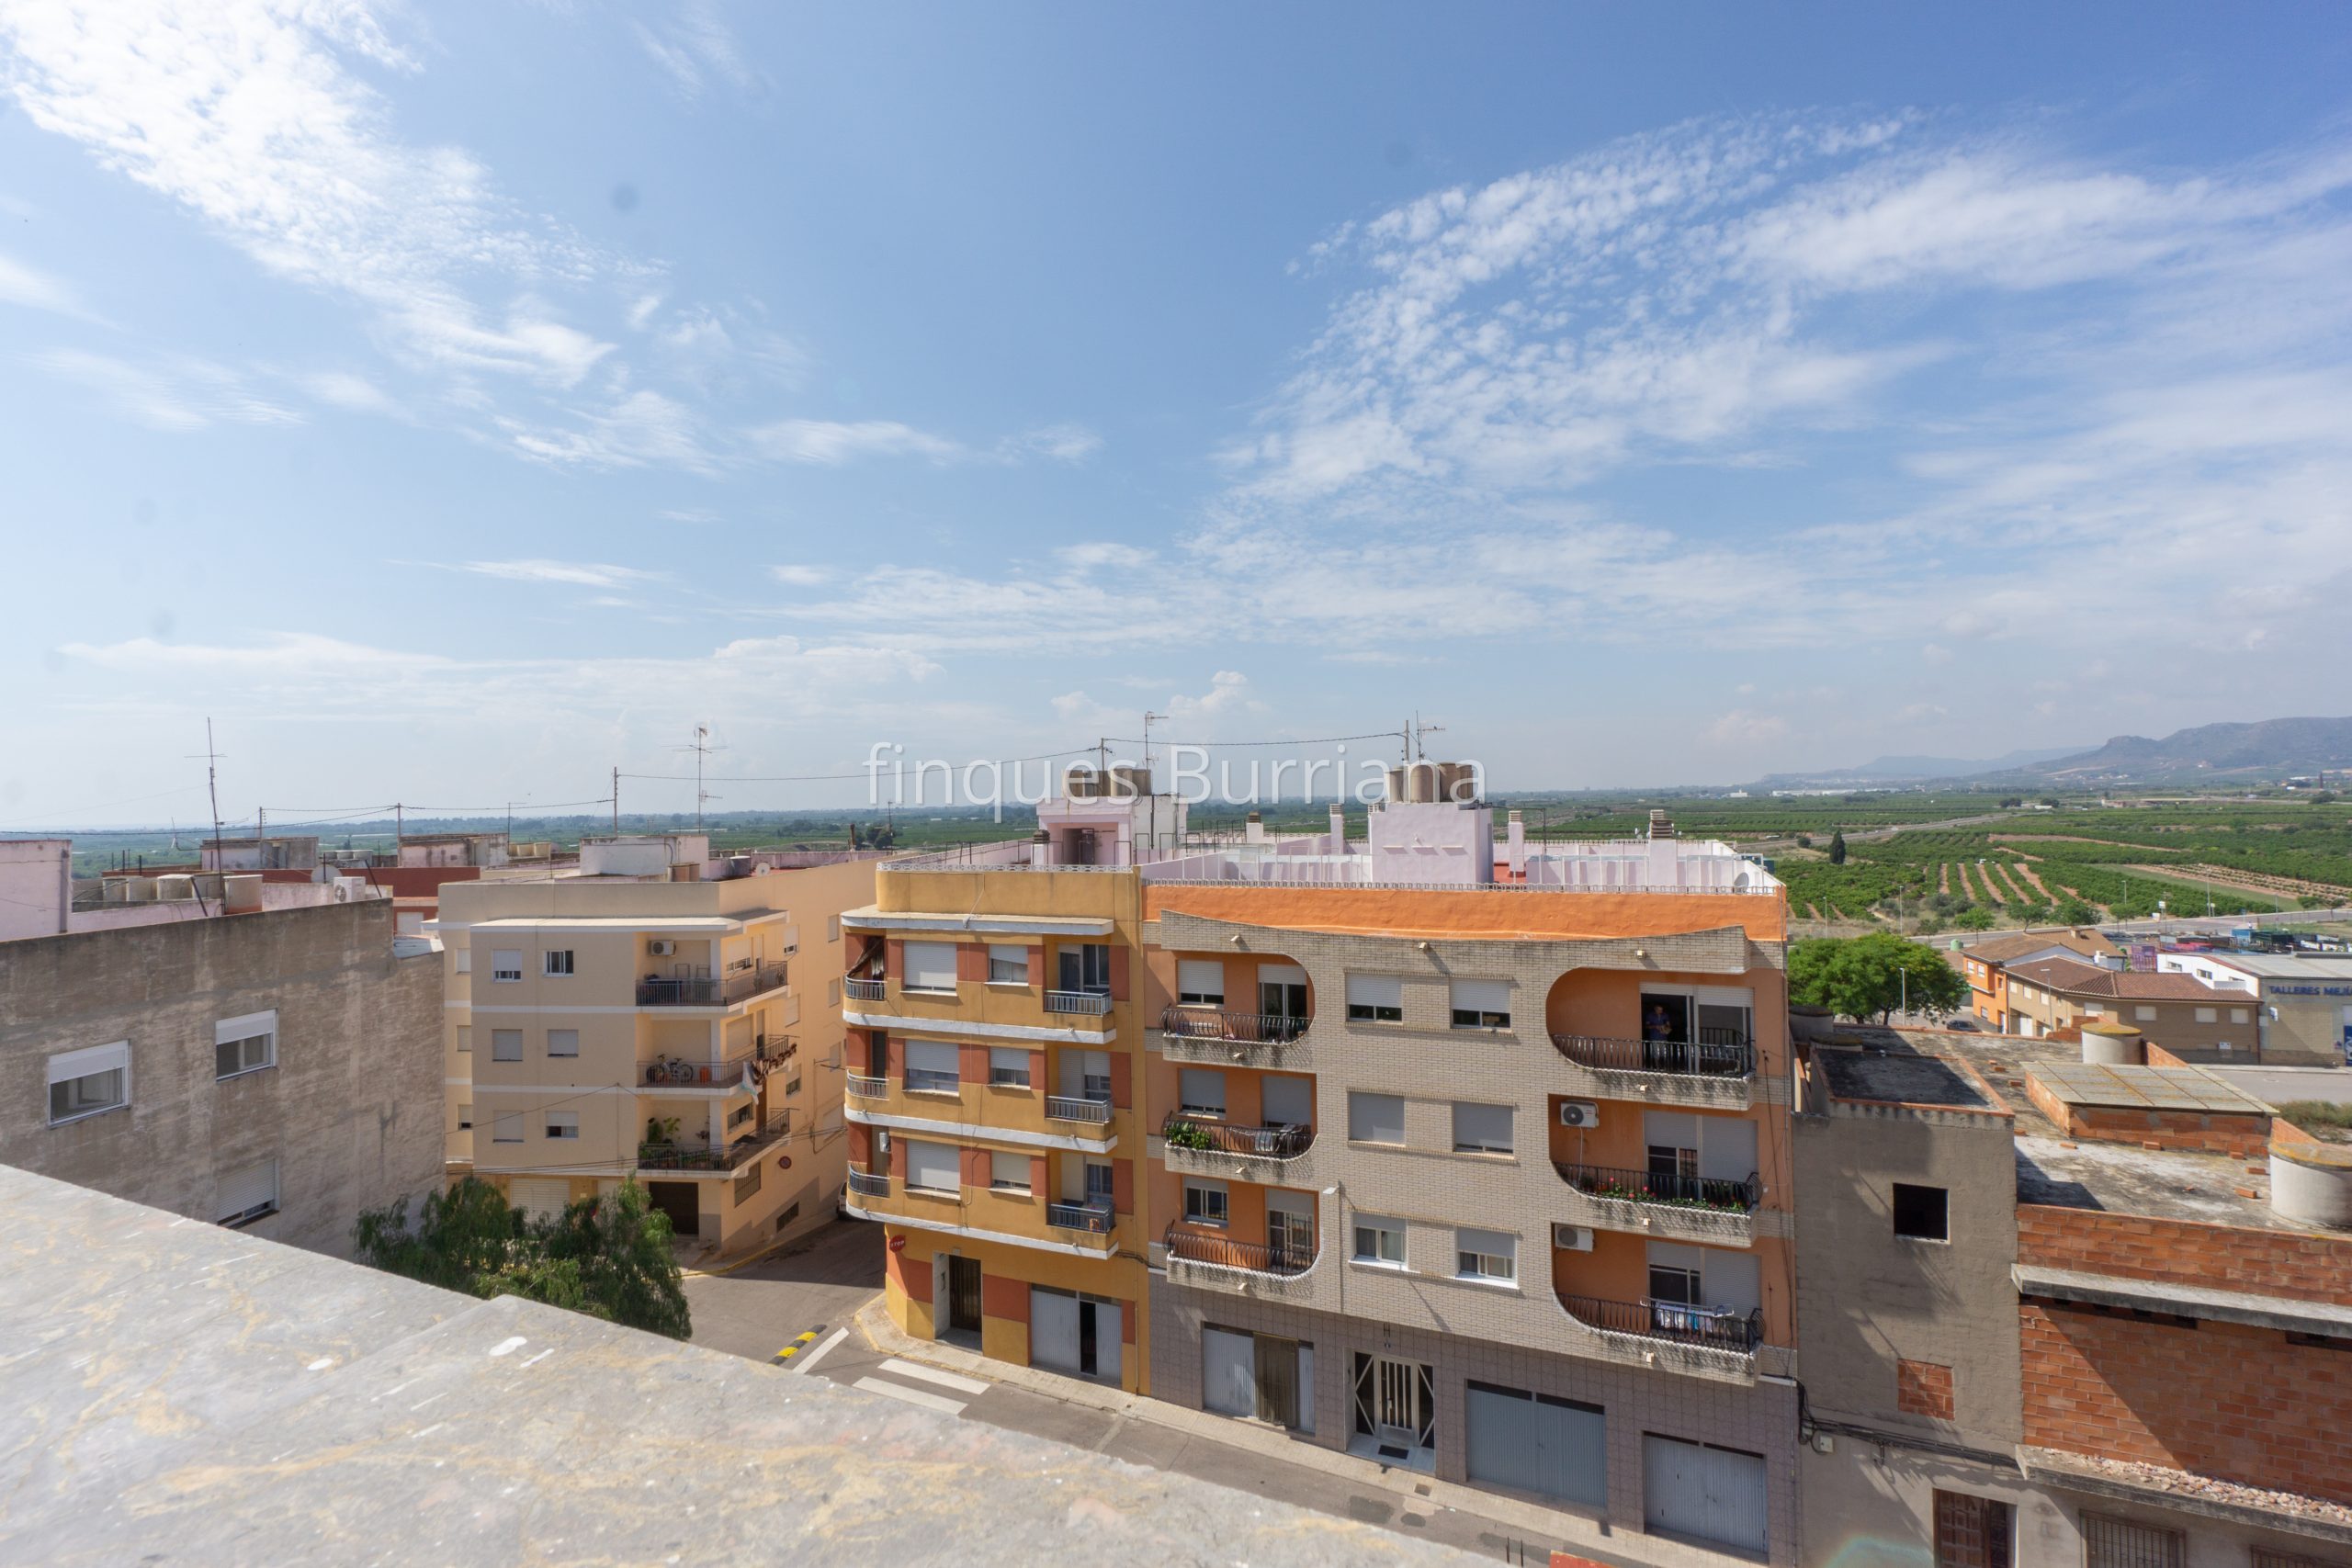 Promoción de viviendas en Almenara (Castellón)